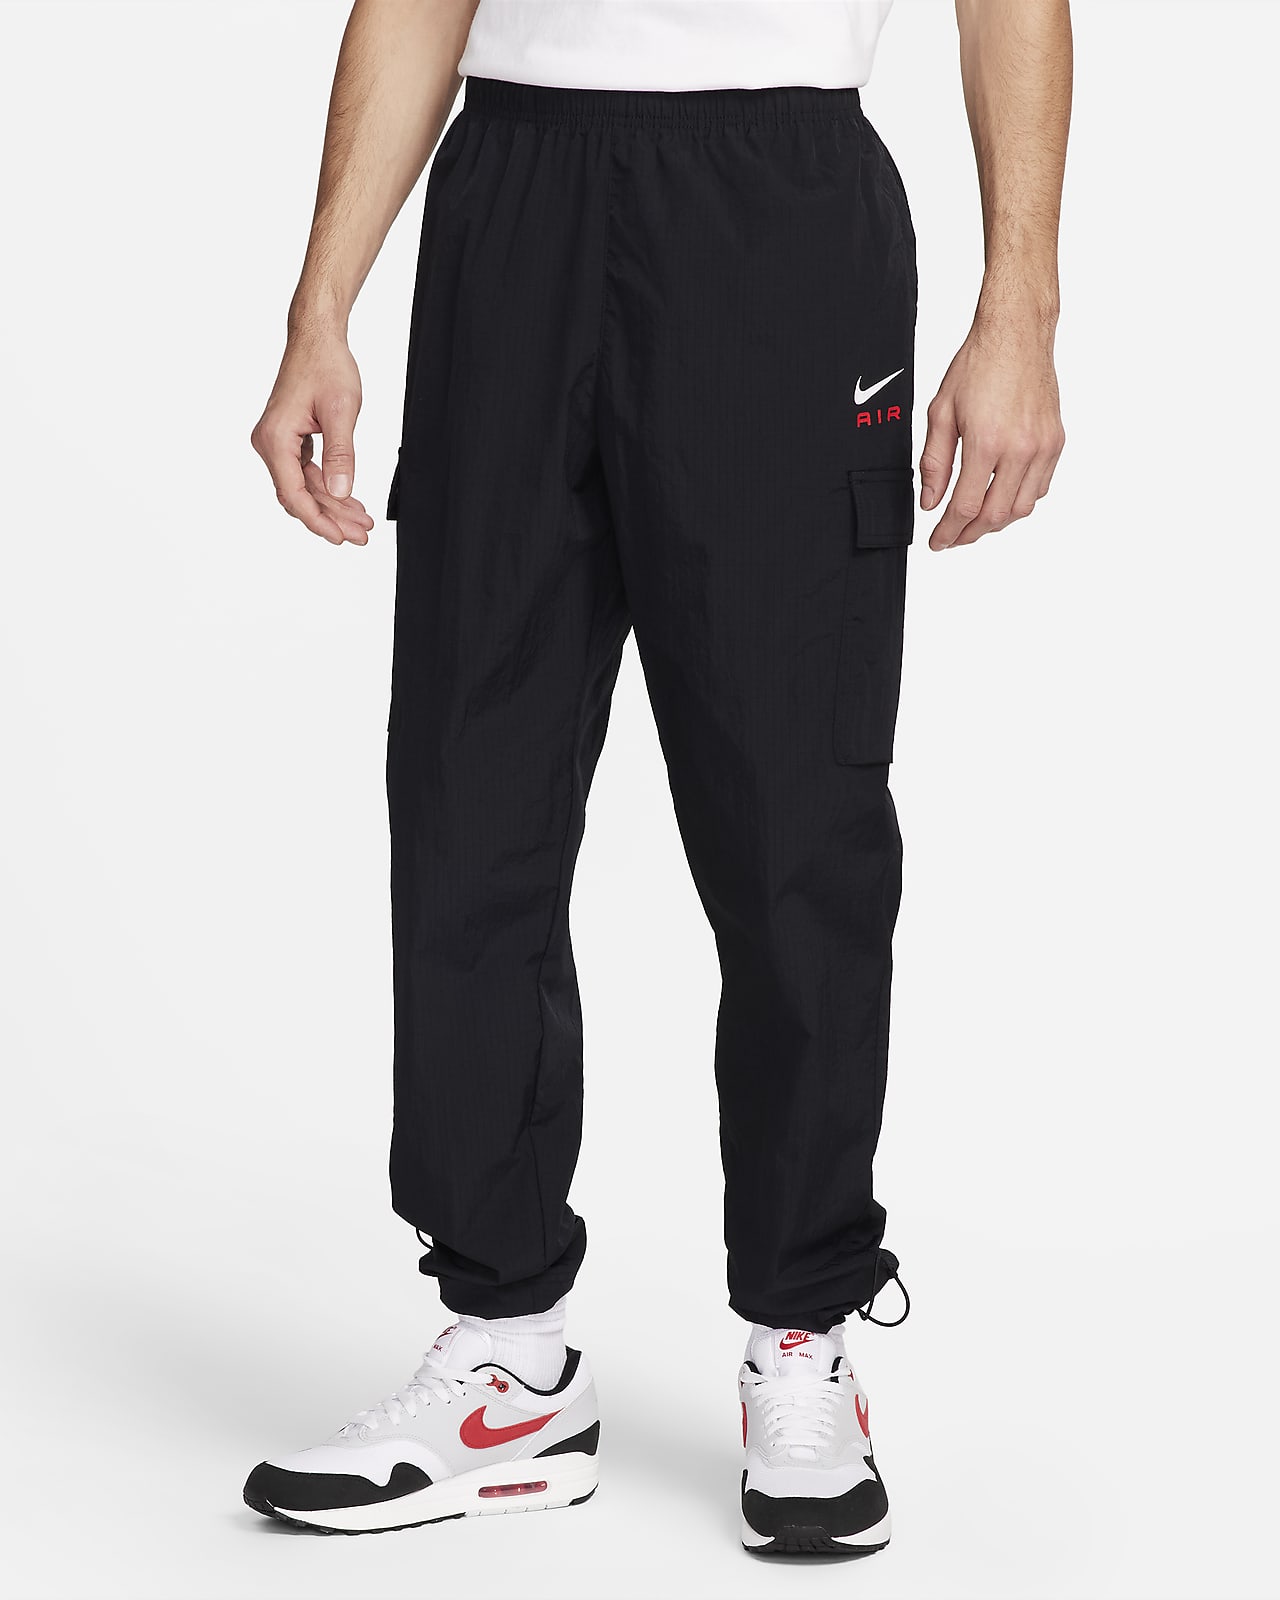 Pánské lehké tkané kalhoty Nike Air